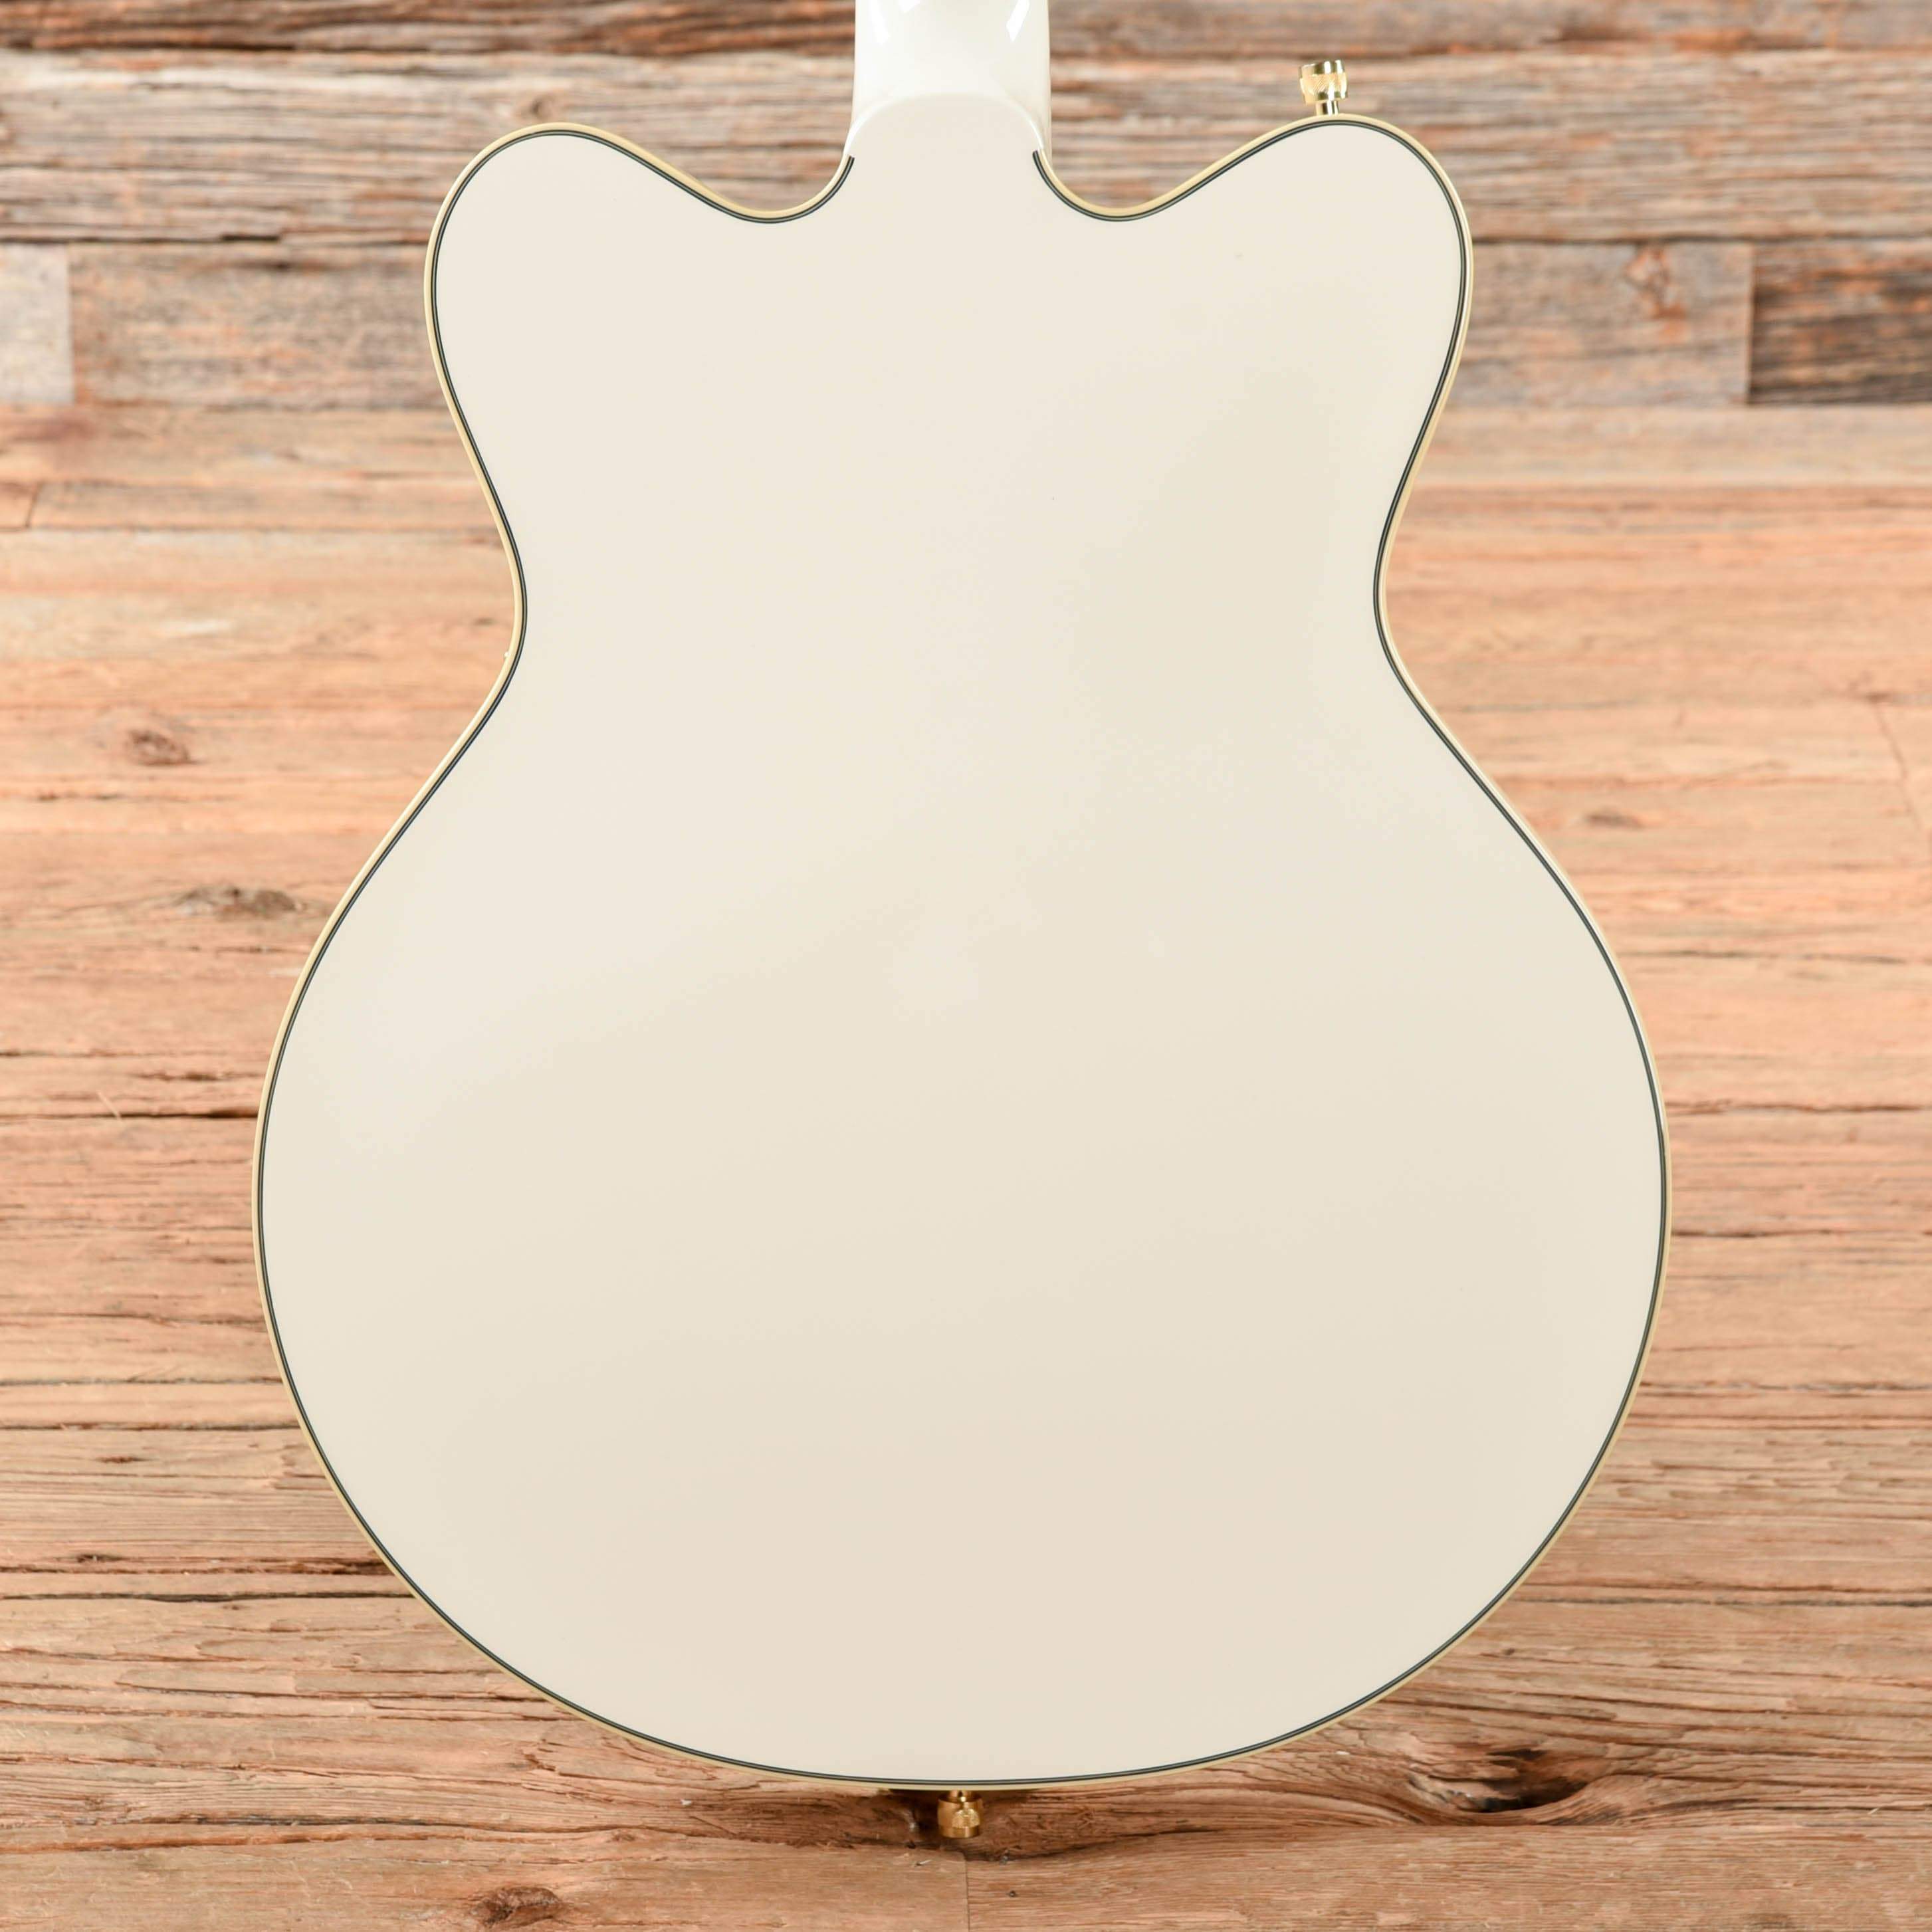 Gretsch G5422TG Electromatic White 2016 Electric Guitars / Hollow Body